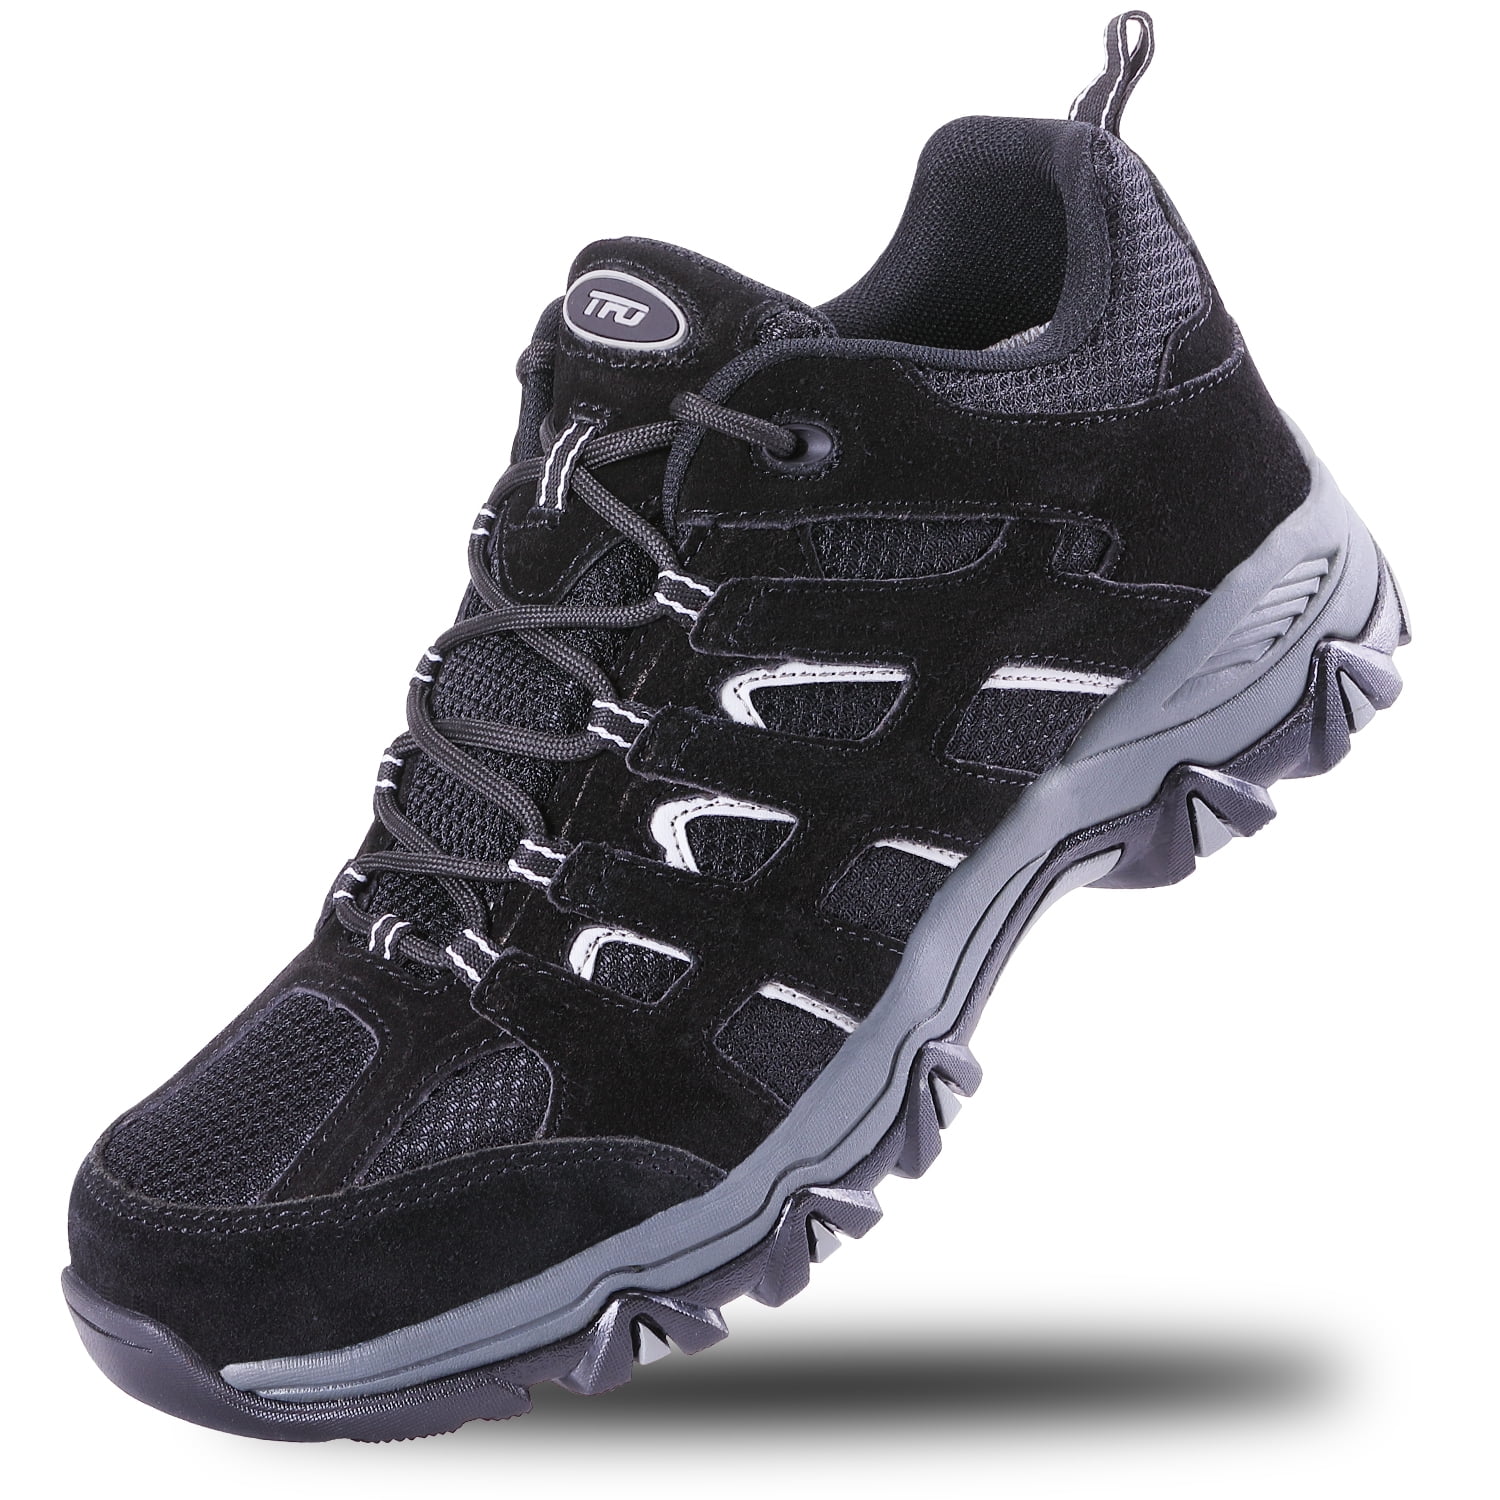 Men Hiking Shoes,Lightweight Adjustable Walking Hiking Trekking Trail Rambling Ankle Boots Shoes